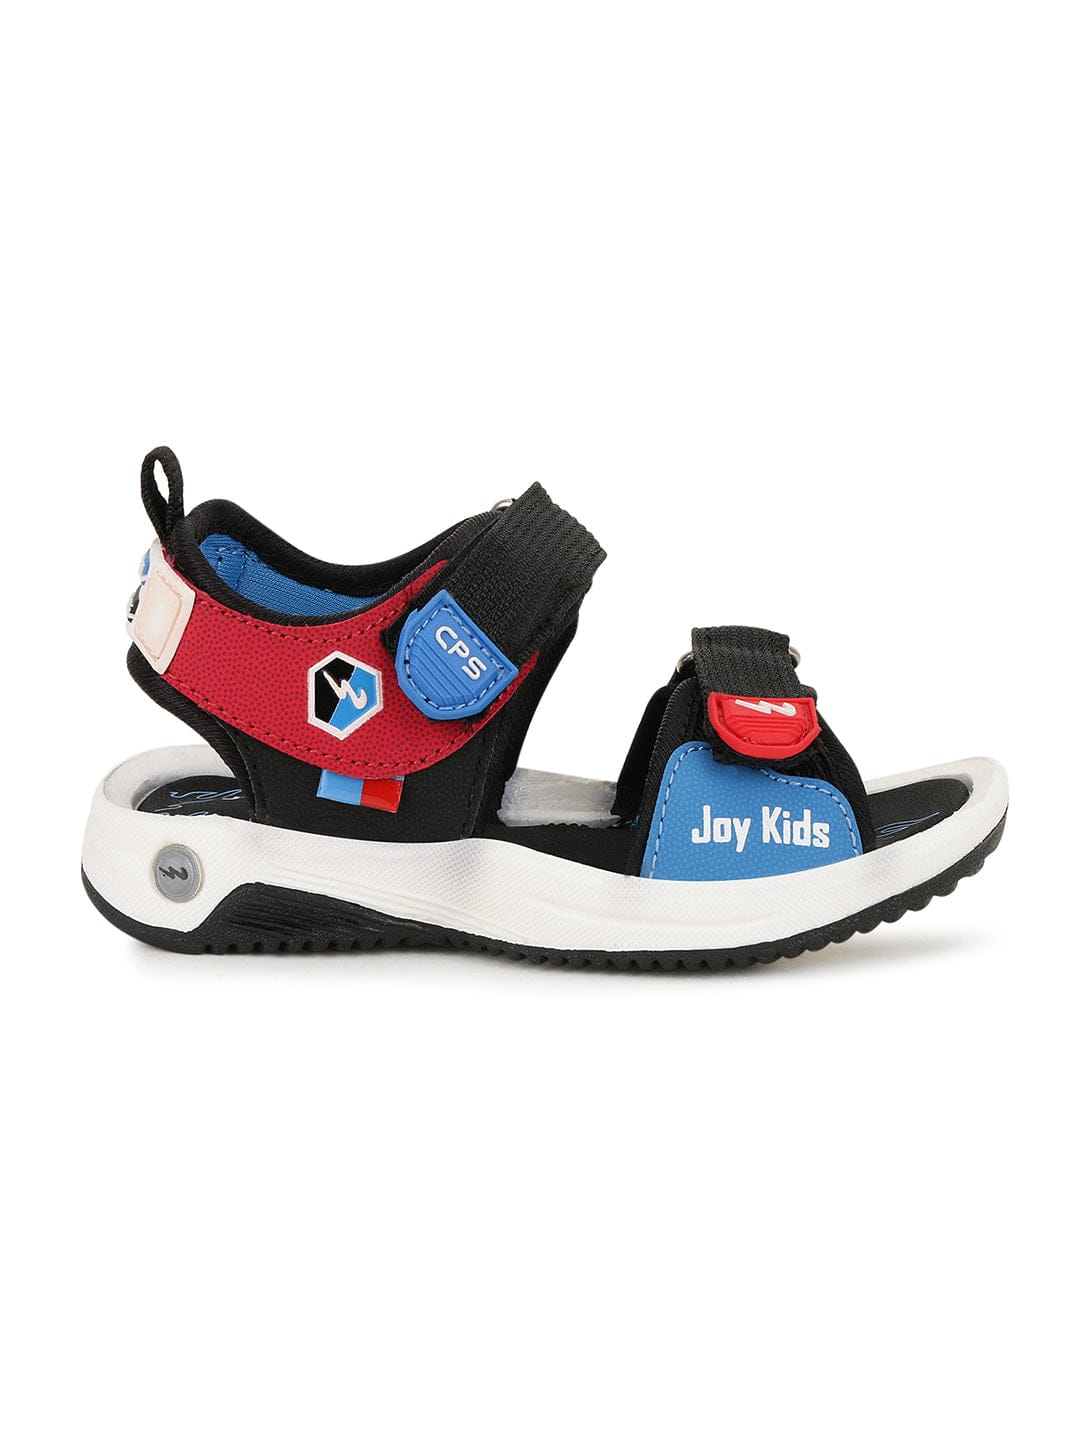 Buy SL-211 Kids Sports Sandal online | Campus Shoes